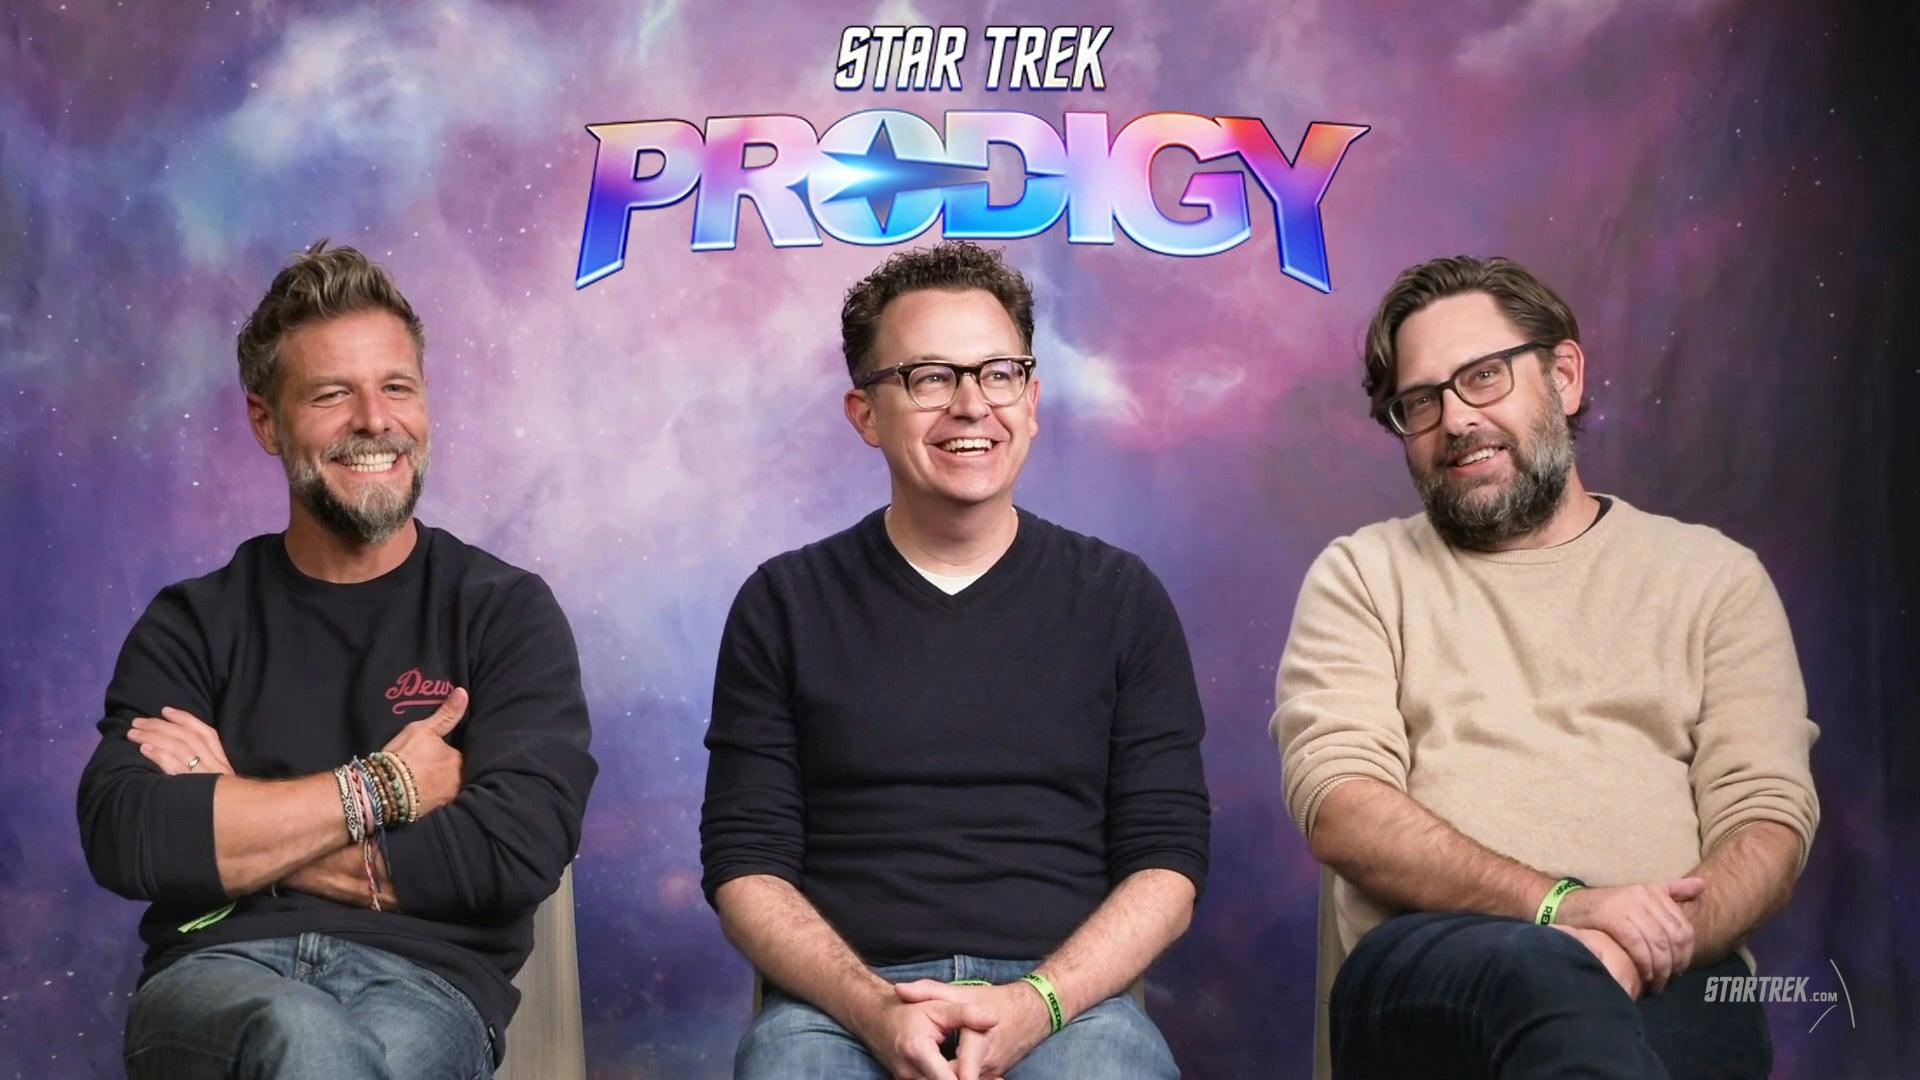 Ben Hibon with Kevin and Dan Hageman talk about Star Trek: Prodigy at New York Comic Con 2021.